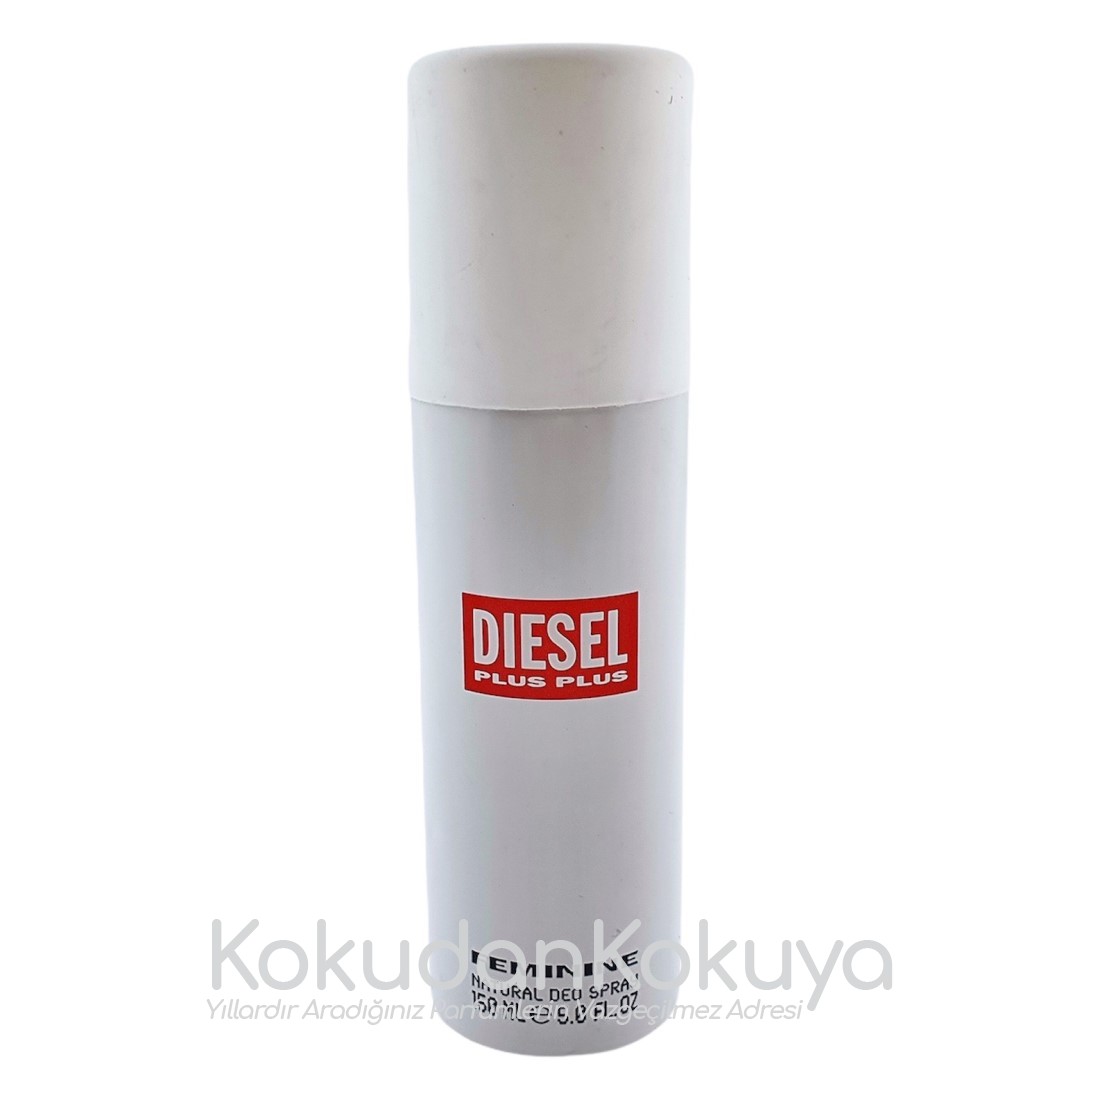 DIESEL Plus Plus Feminine (Vintage) Deodorant Kadın 150ml Deodorant Spray (Metal) 